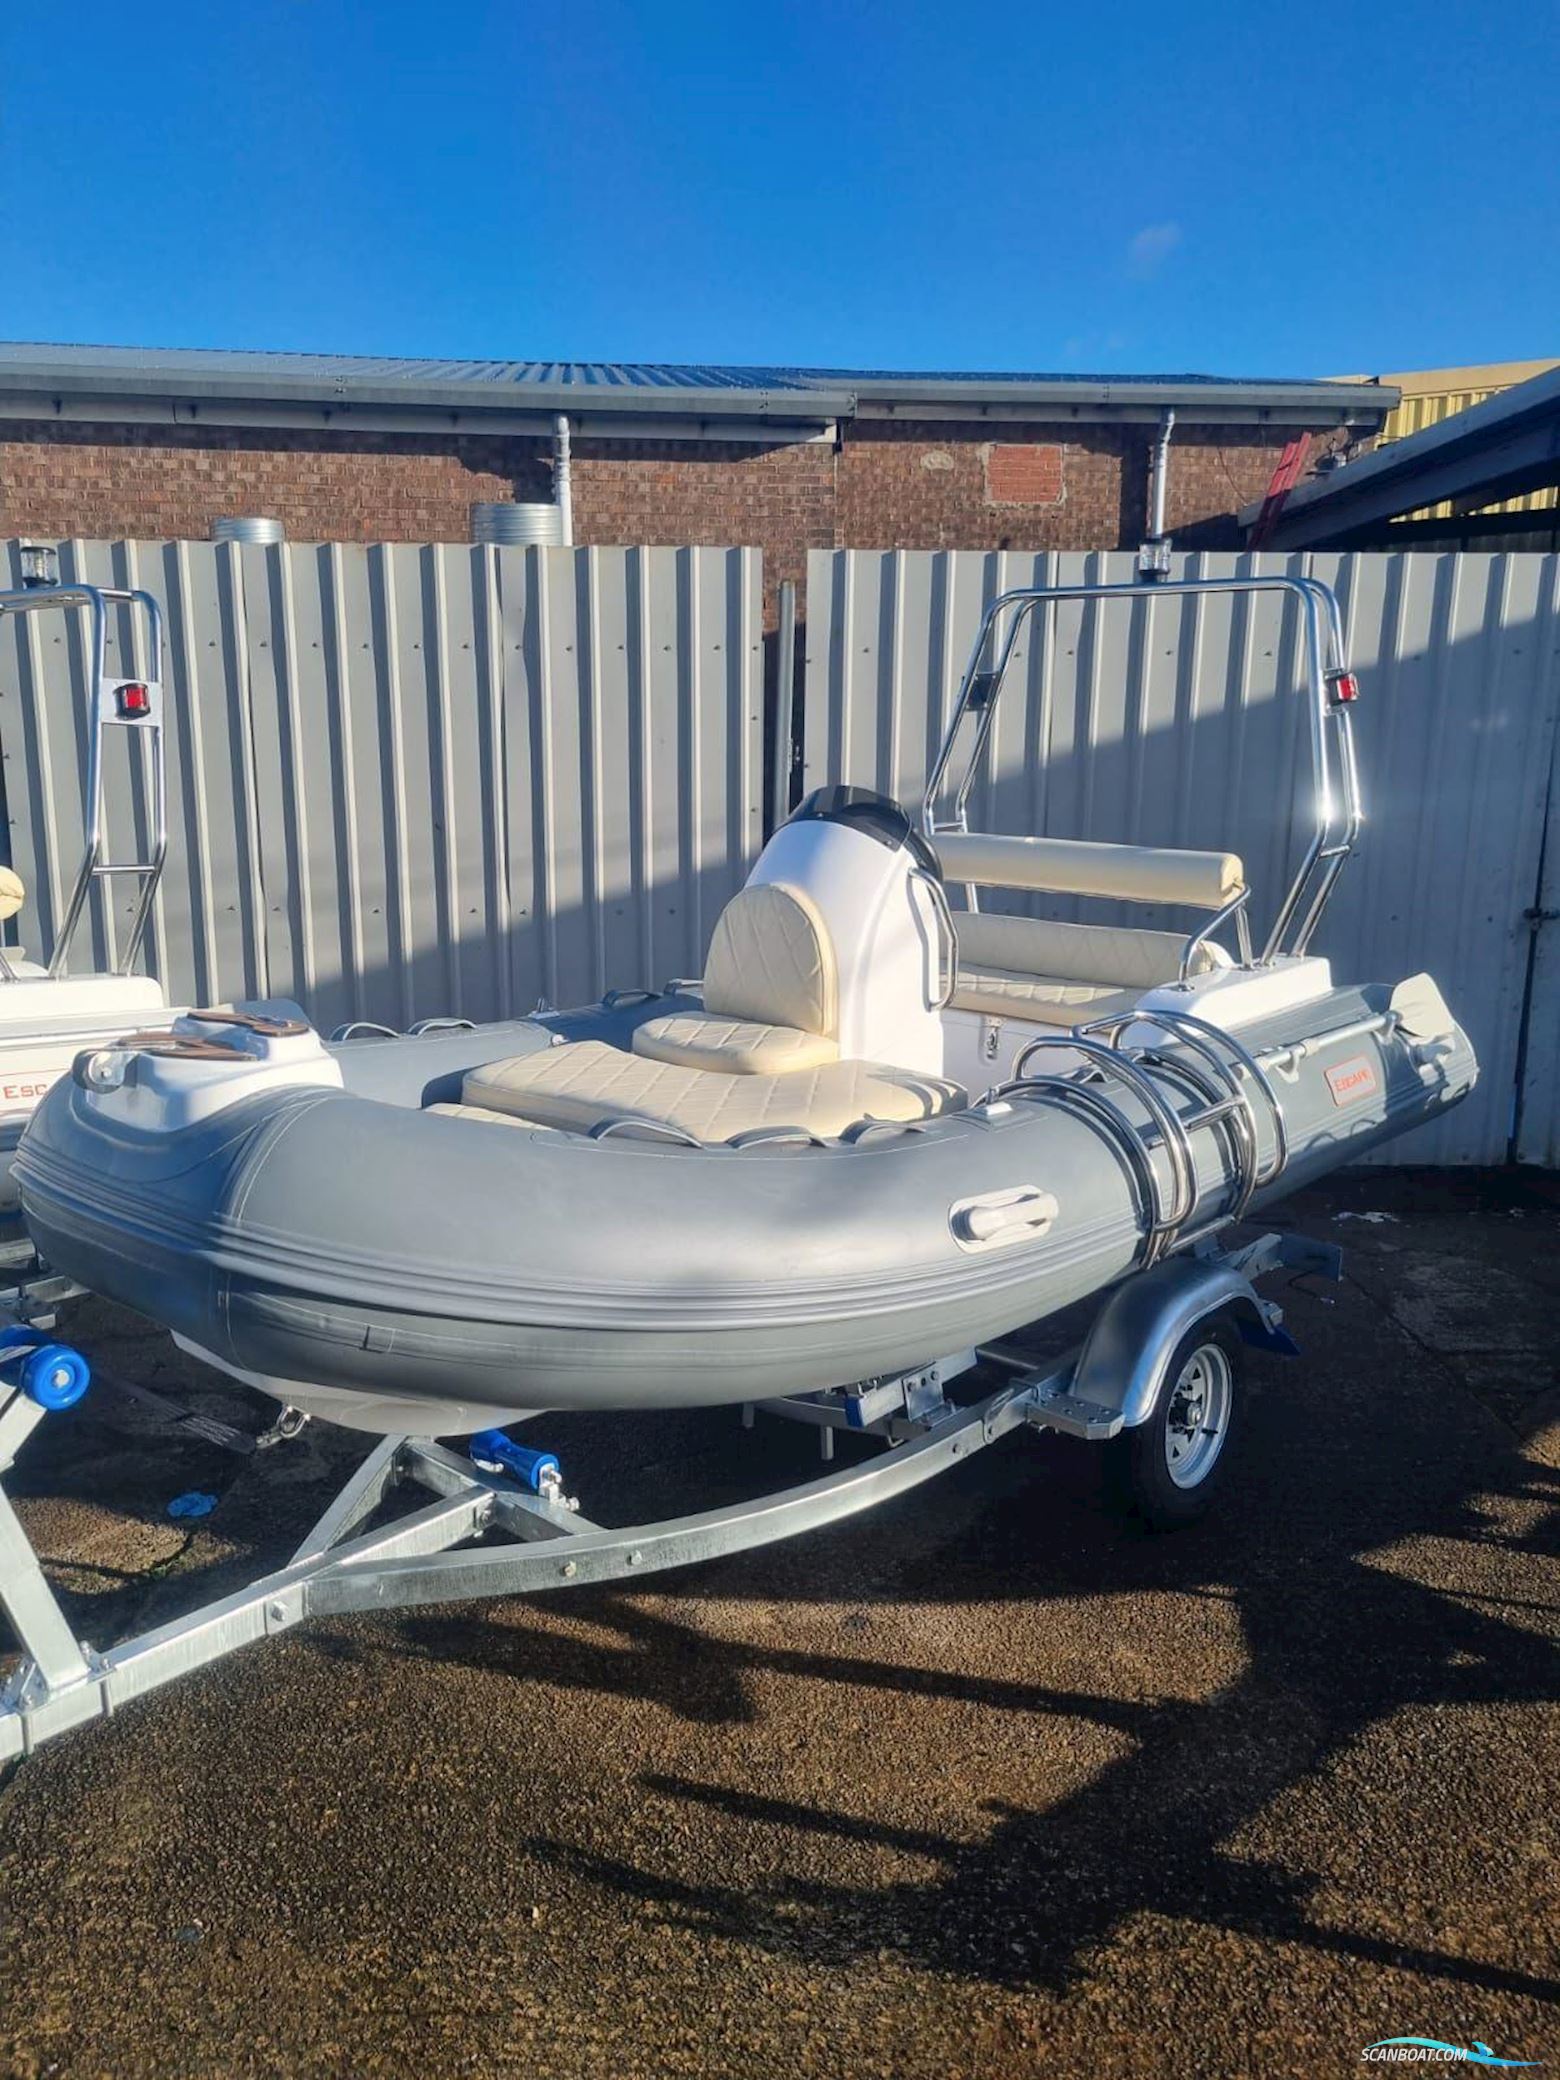 Unclassified Escape 390 Motor boat 2022, United Kingdom